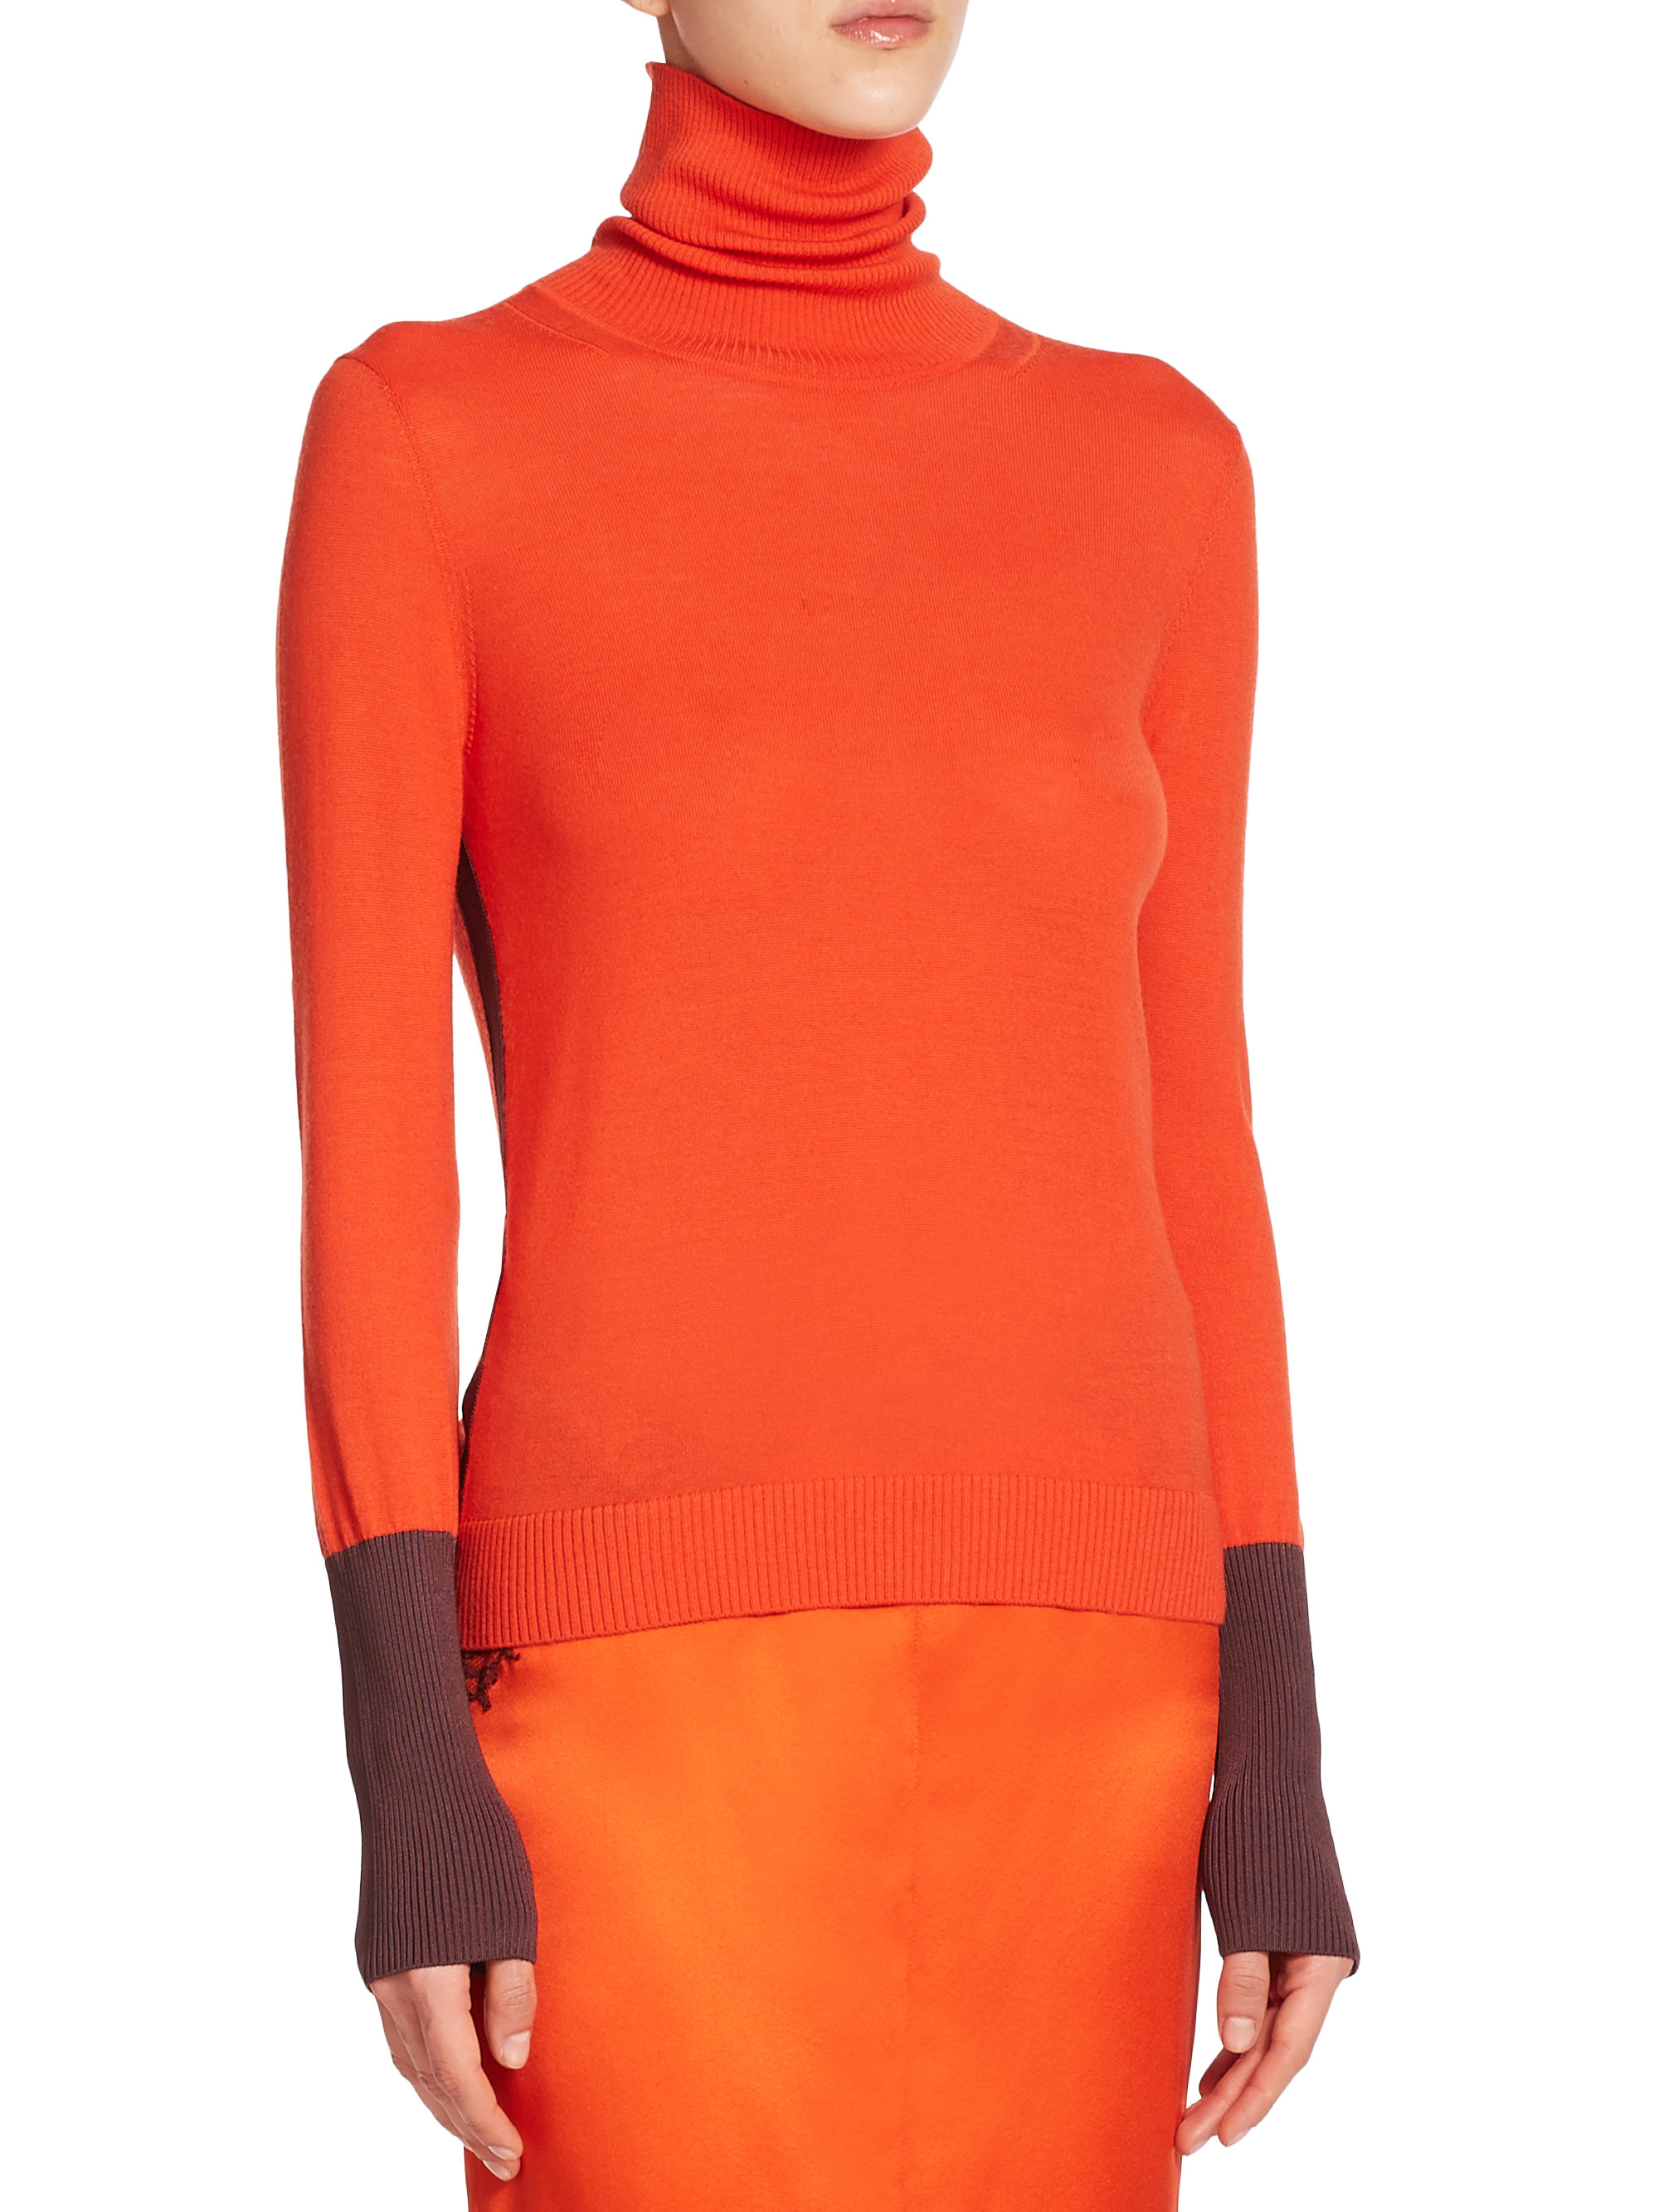 Lyst - Rag & Bone Jessica Colorblock Turtleneck Sweater in Orange